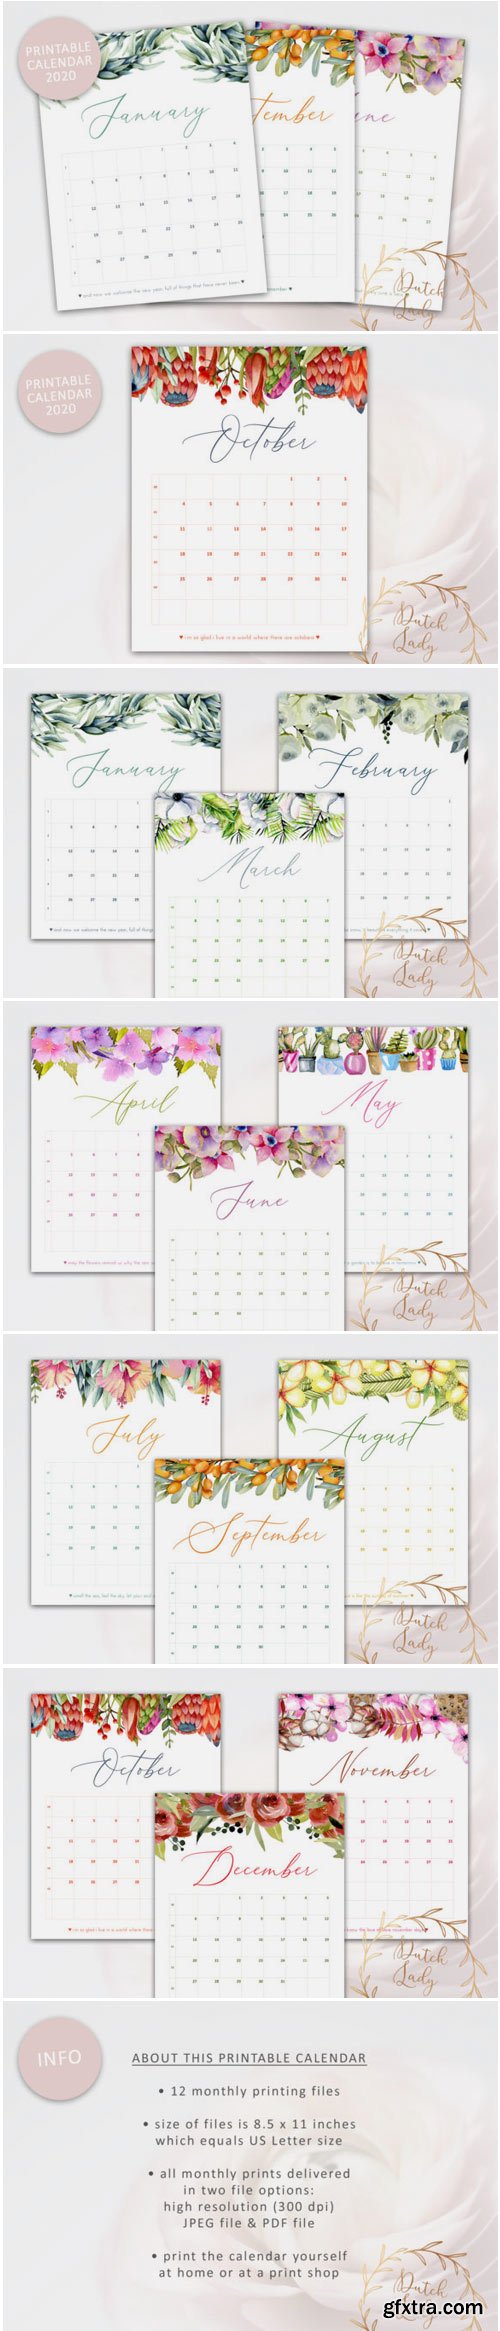 Printable Monthly Calendar 2020 Florals 1552044